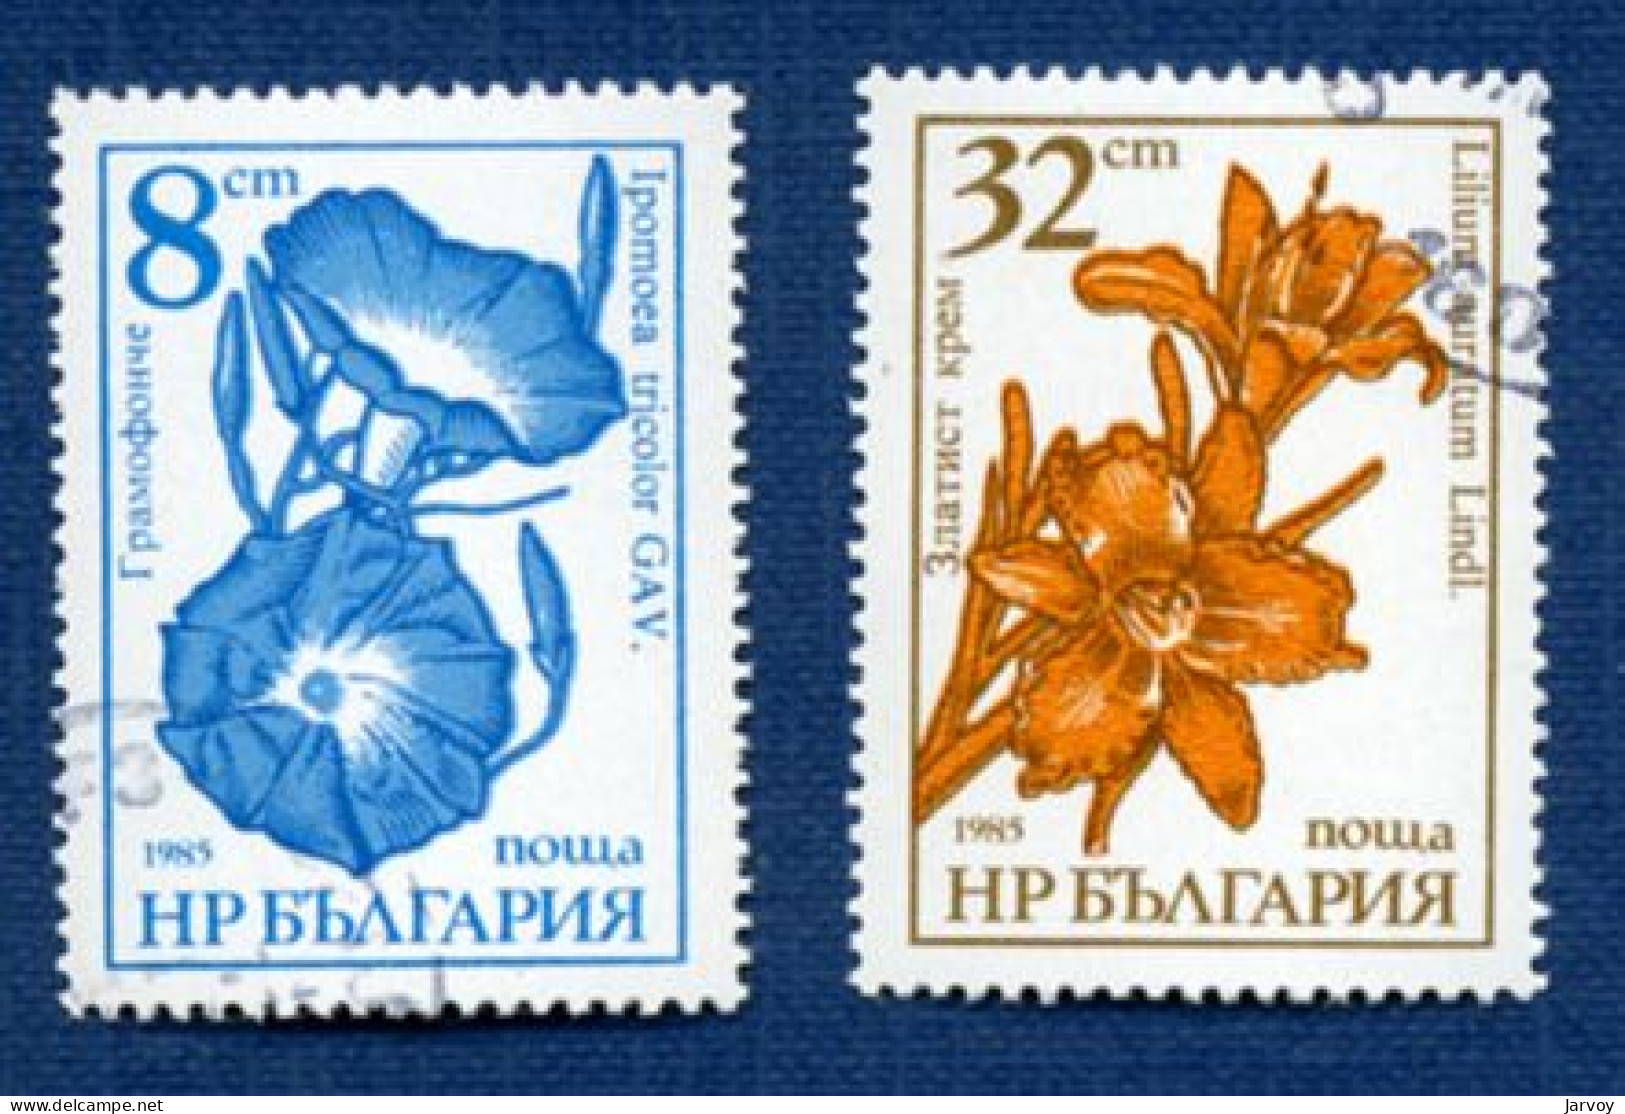 Bulgarie 1956 à 1988, Fruits, légumes, fleurs (19 timbres - o)